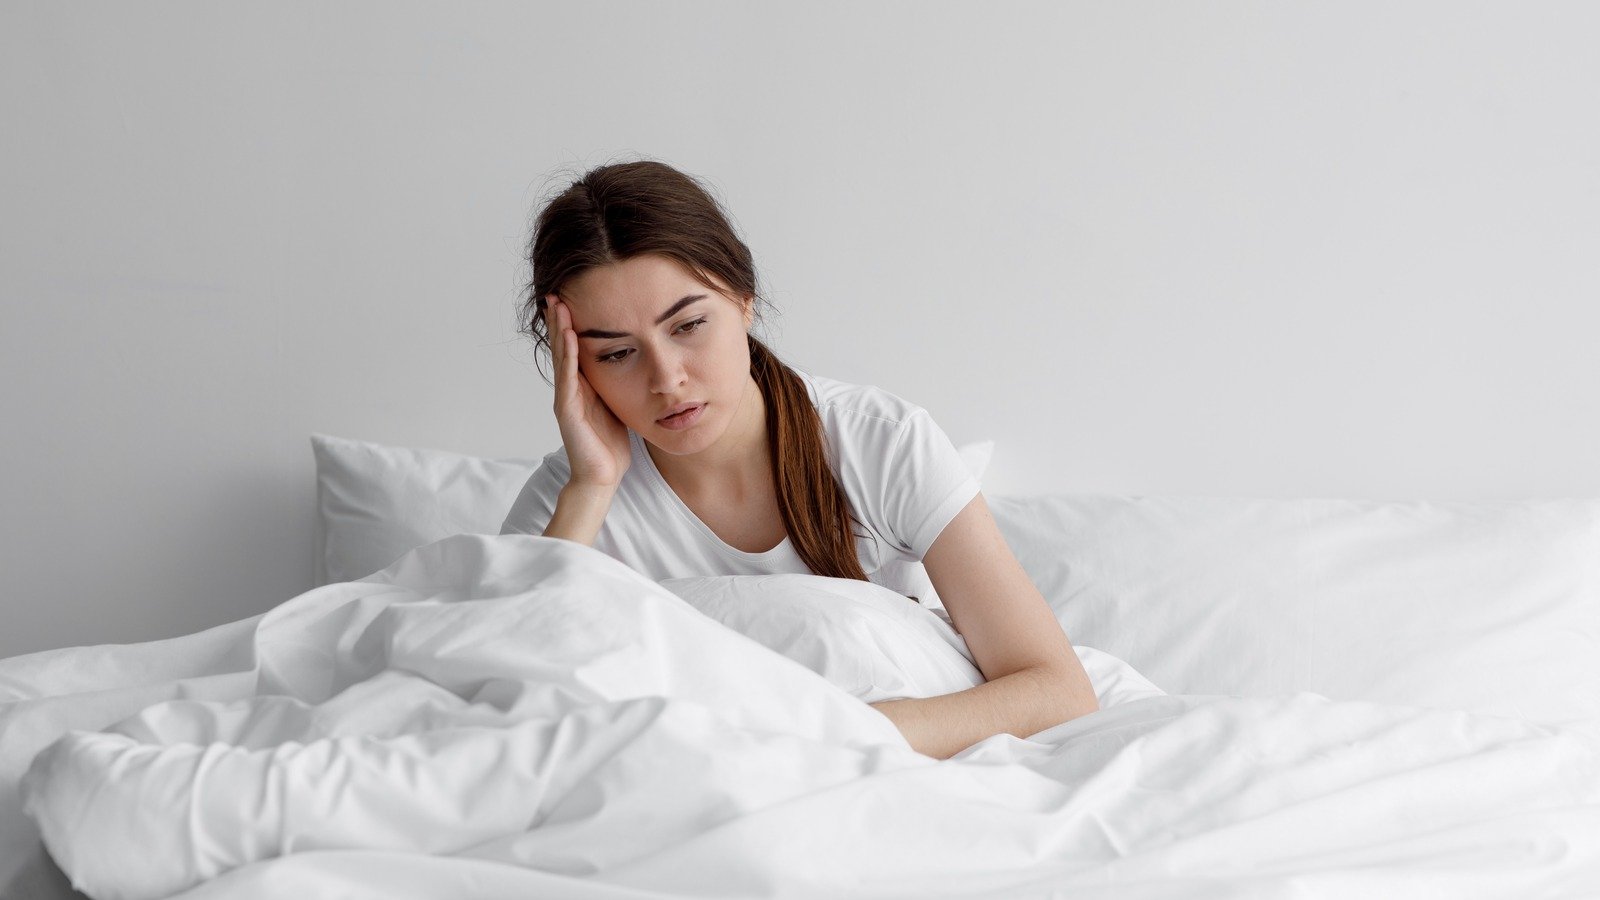 The Bad Sleeping Habit That's Aging You